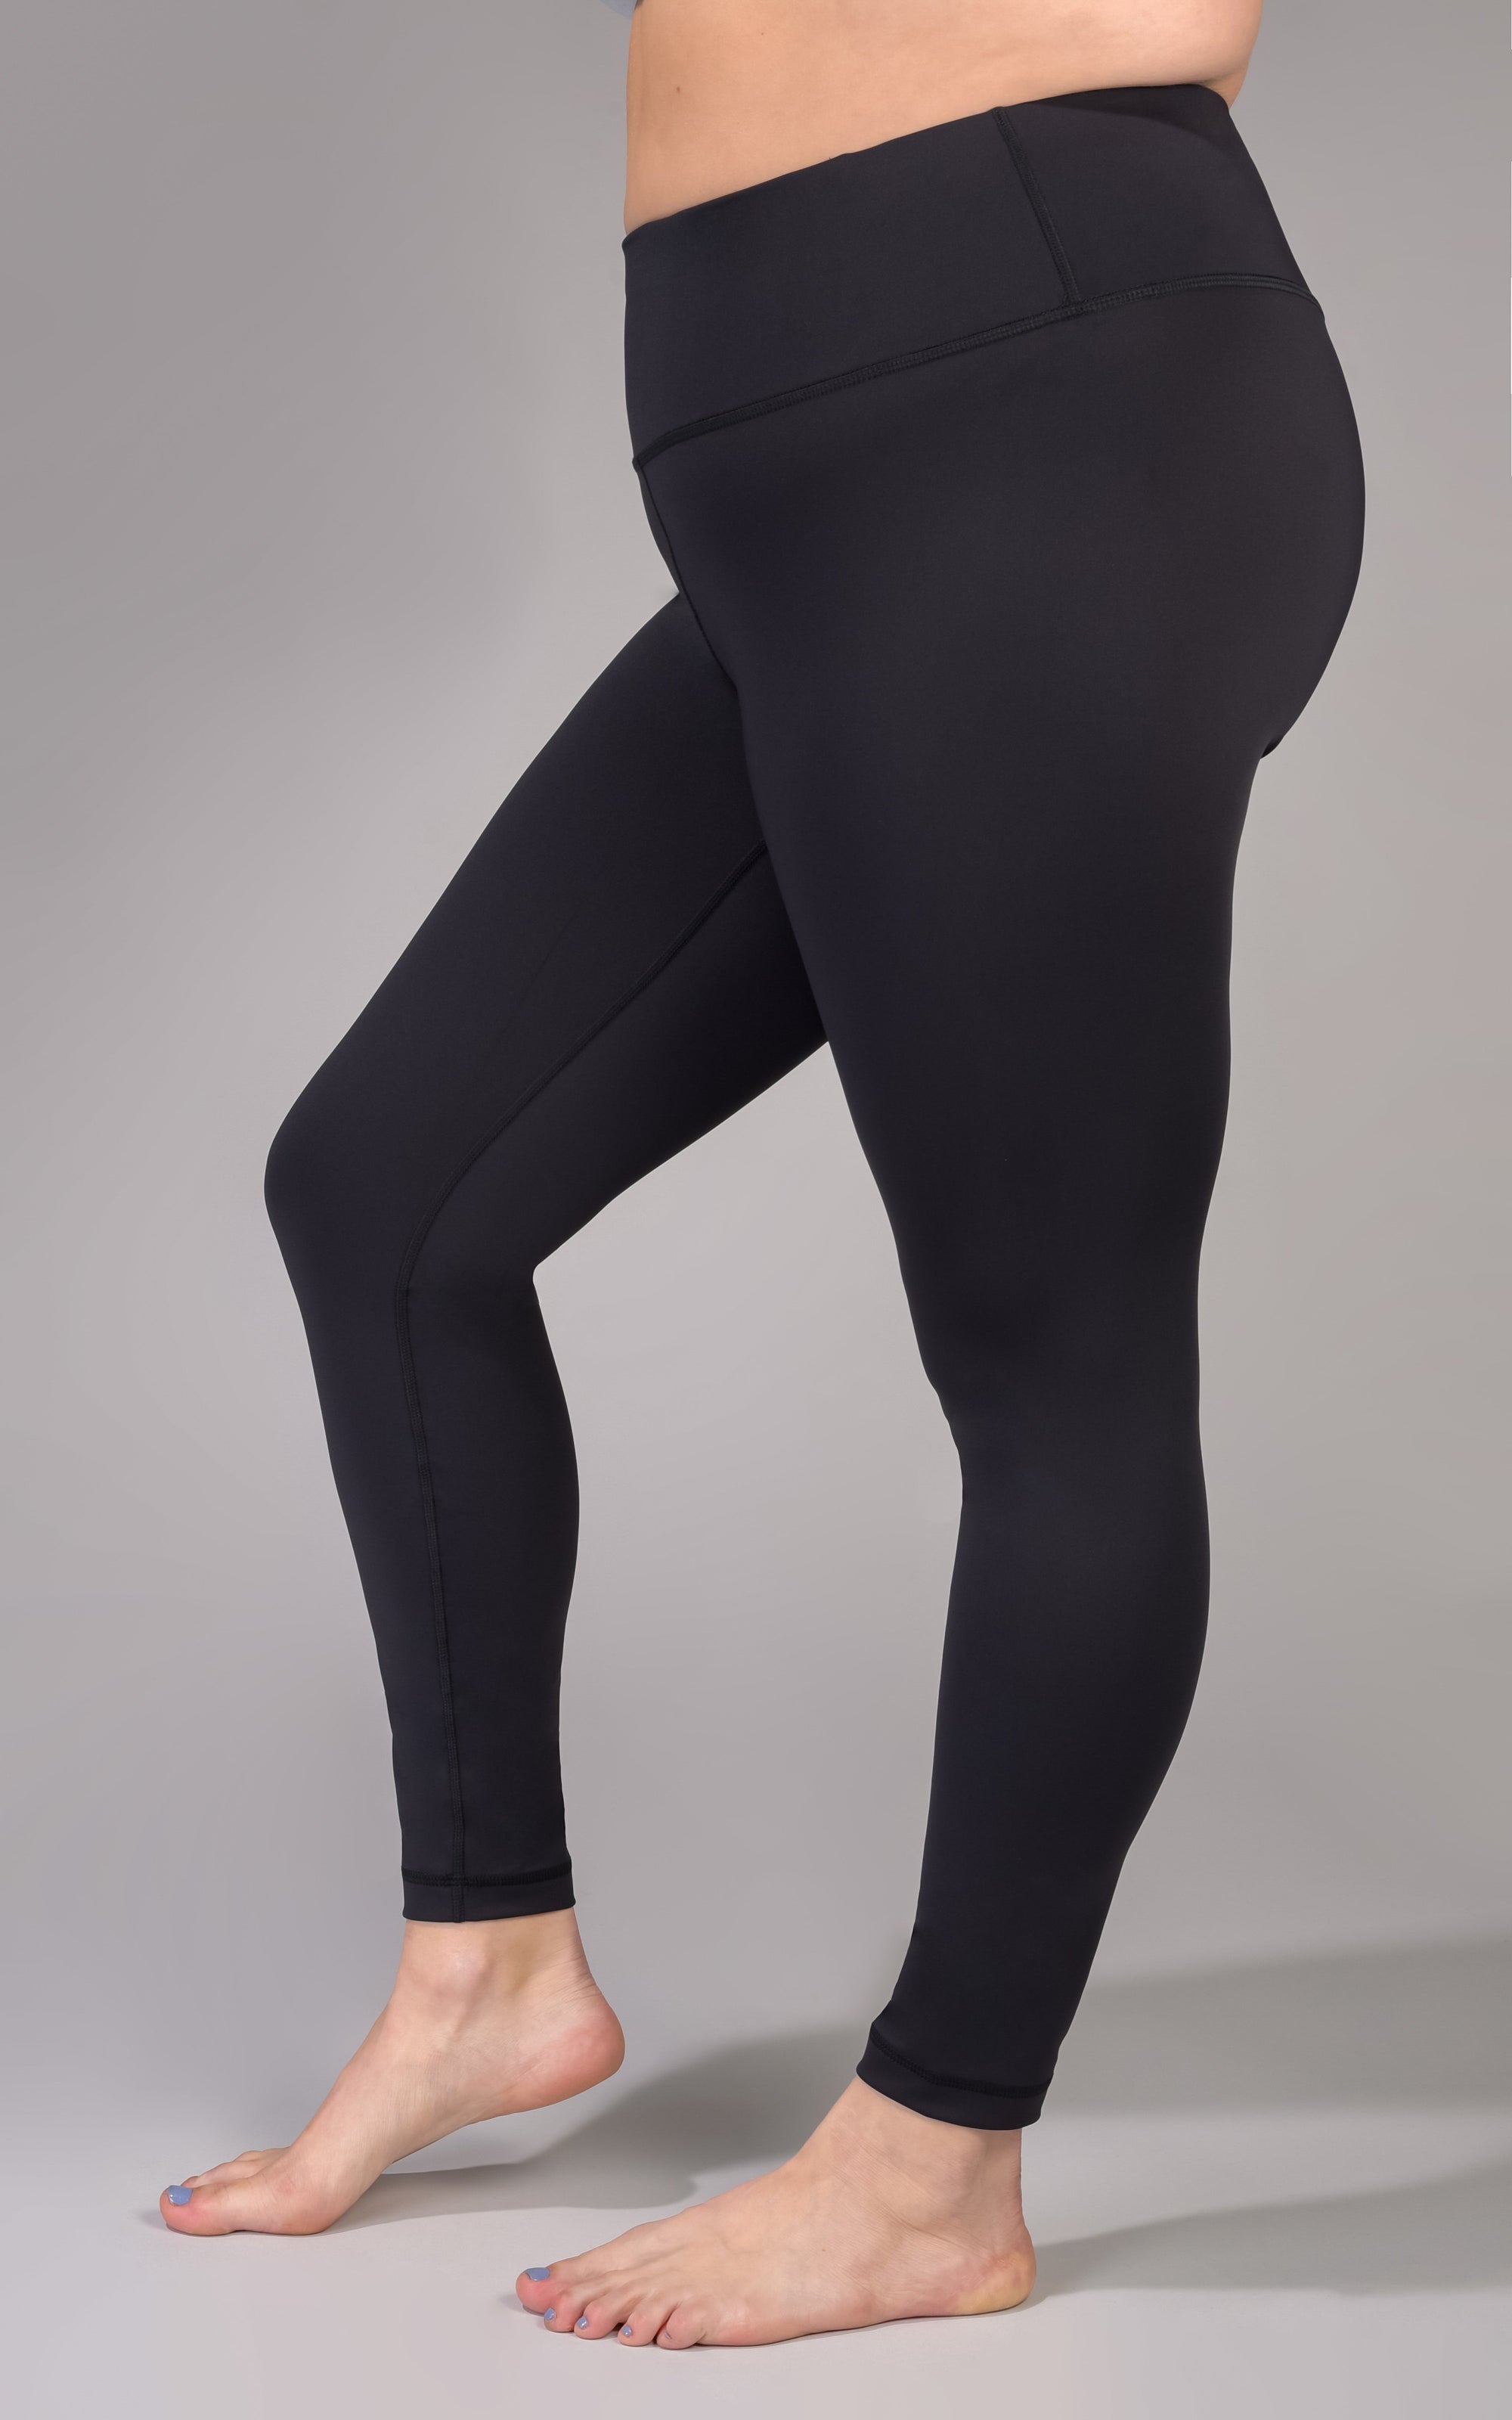 Black Workout Legging/yoga Pants/gym/high Waist Pants/squat Proof